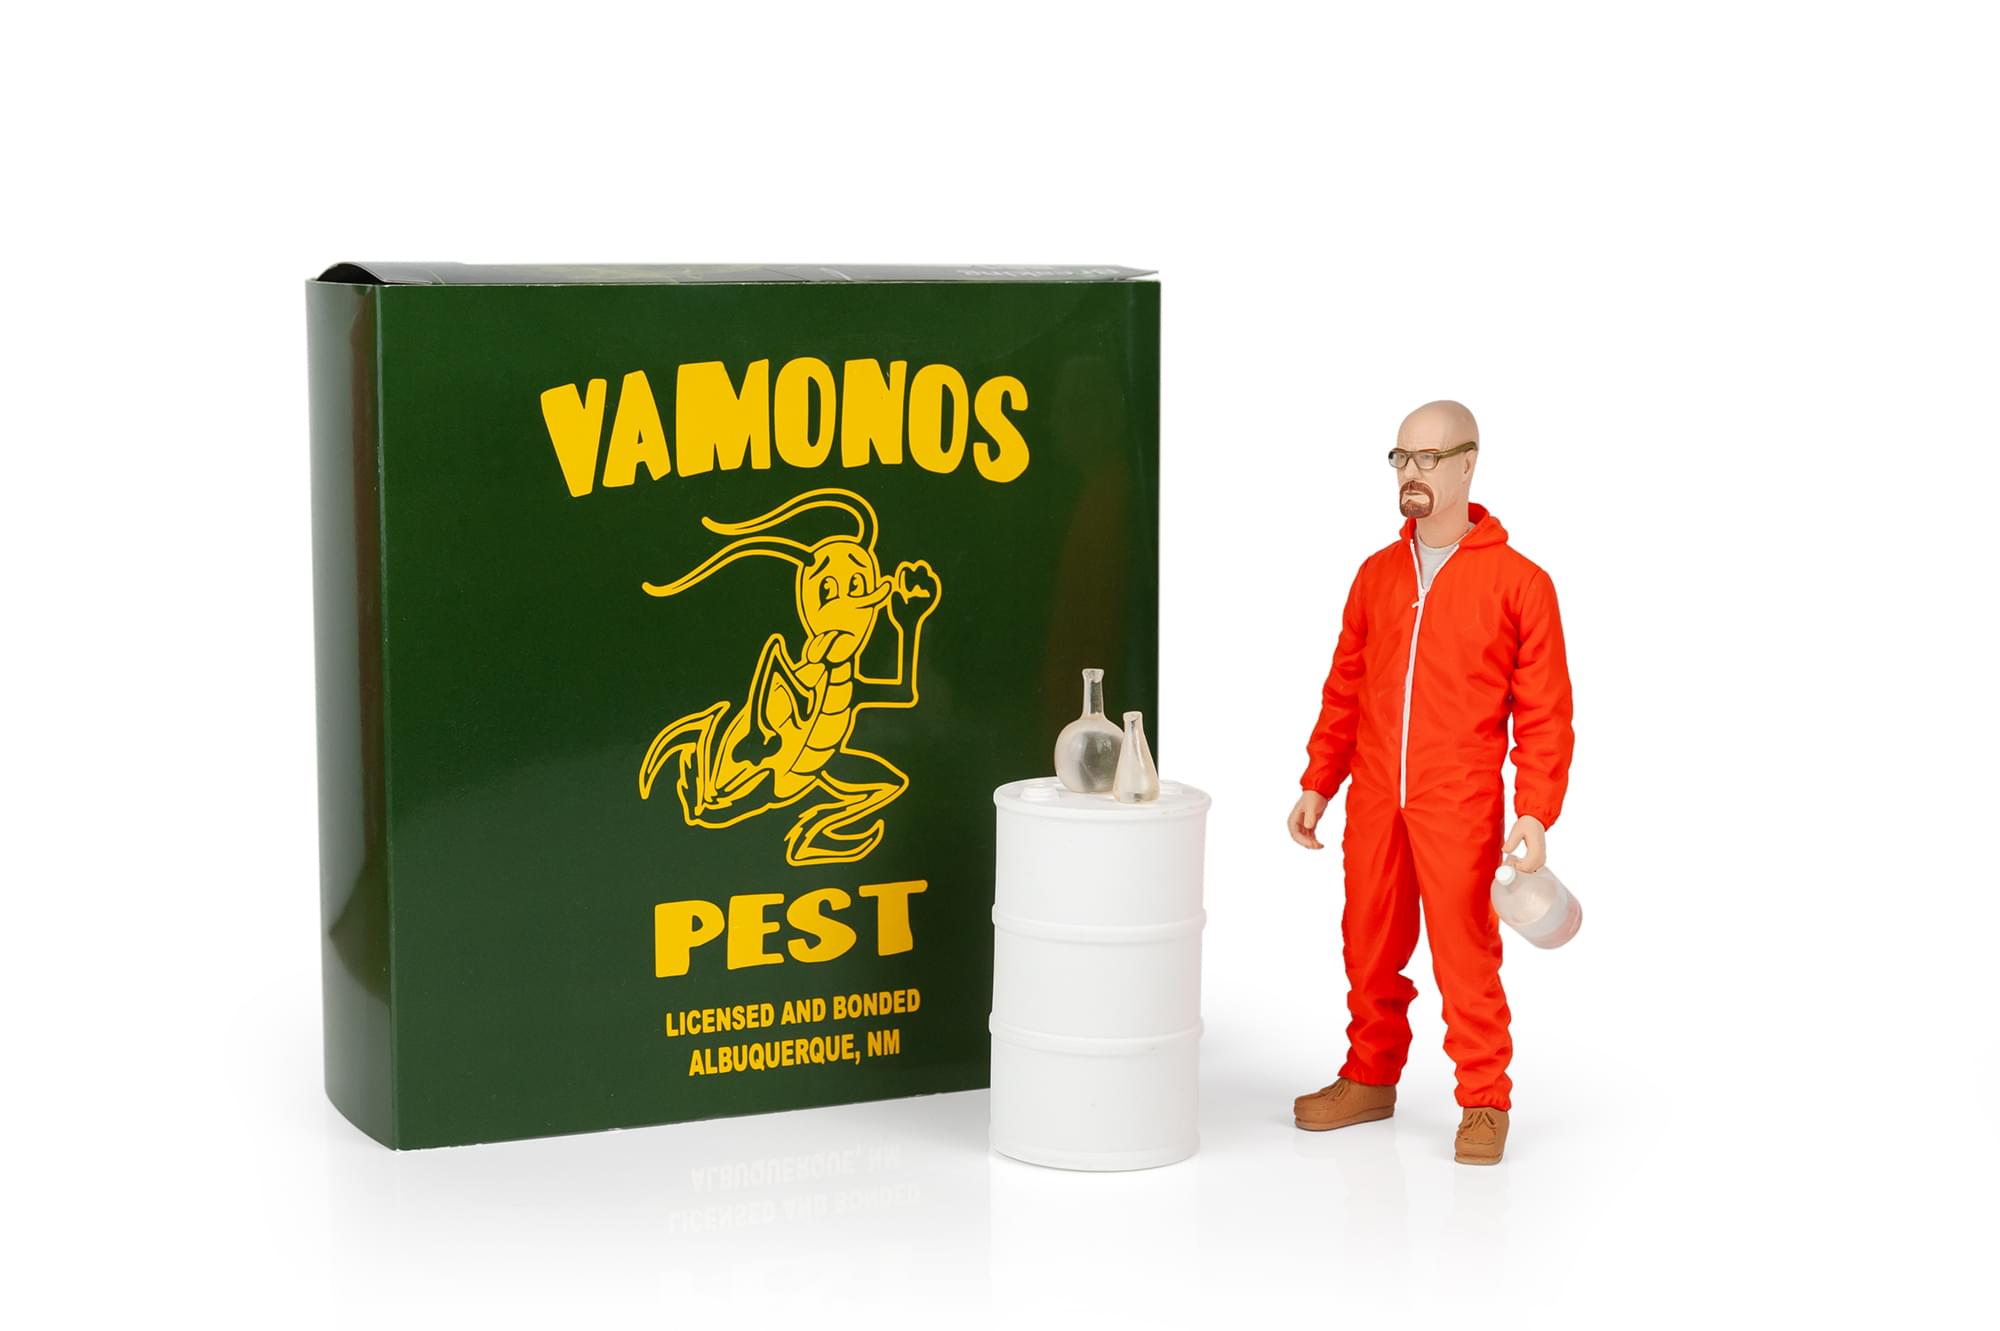 toynk Breaking Bad Walter White In Orange Hazmat Suit Figure | Measures 6 Inches Tall